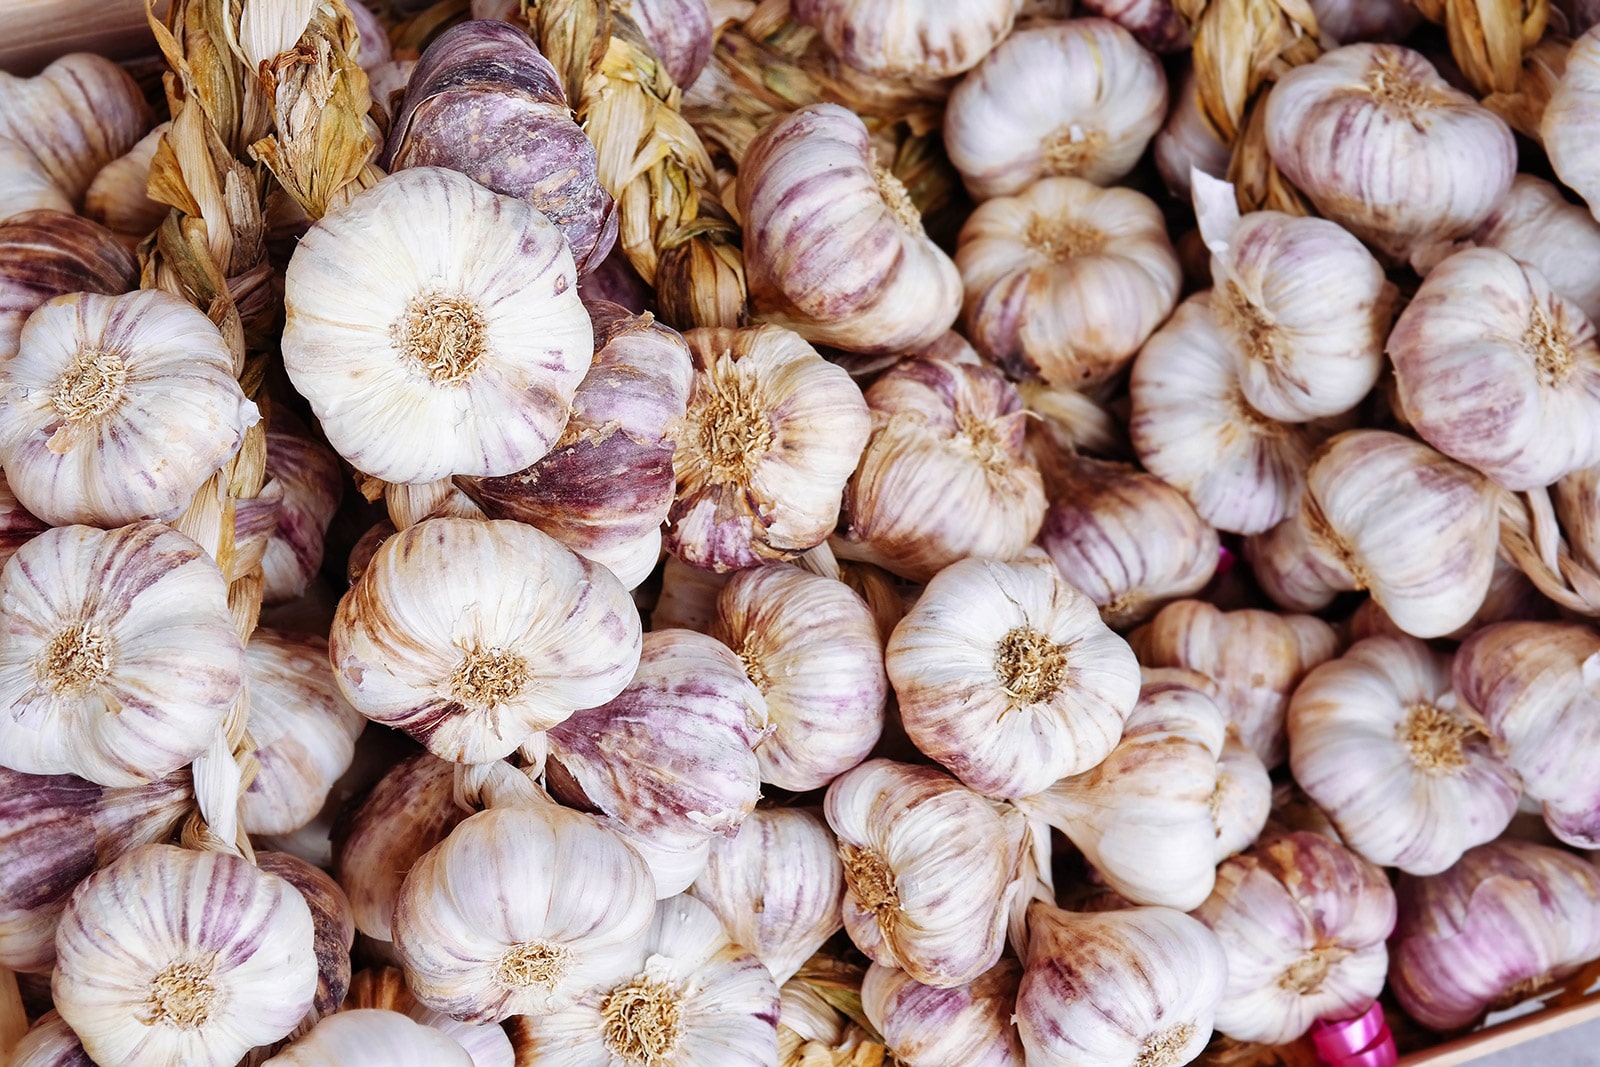 Pile of purple-striped garlic bulbs